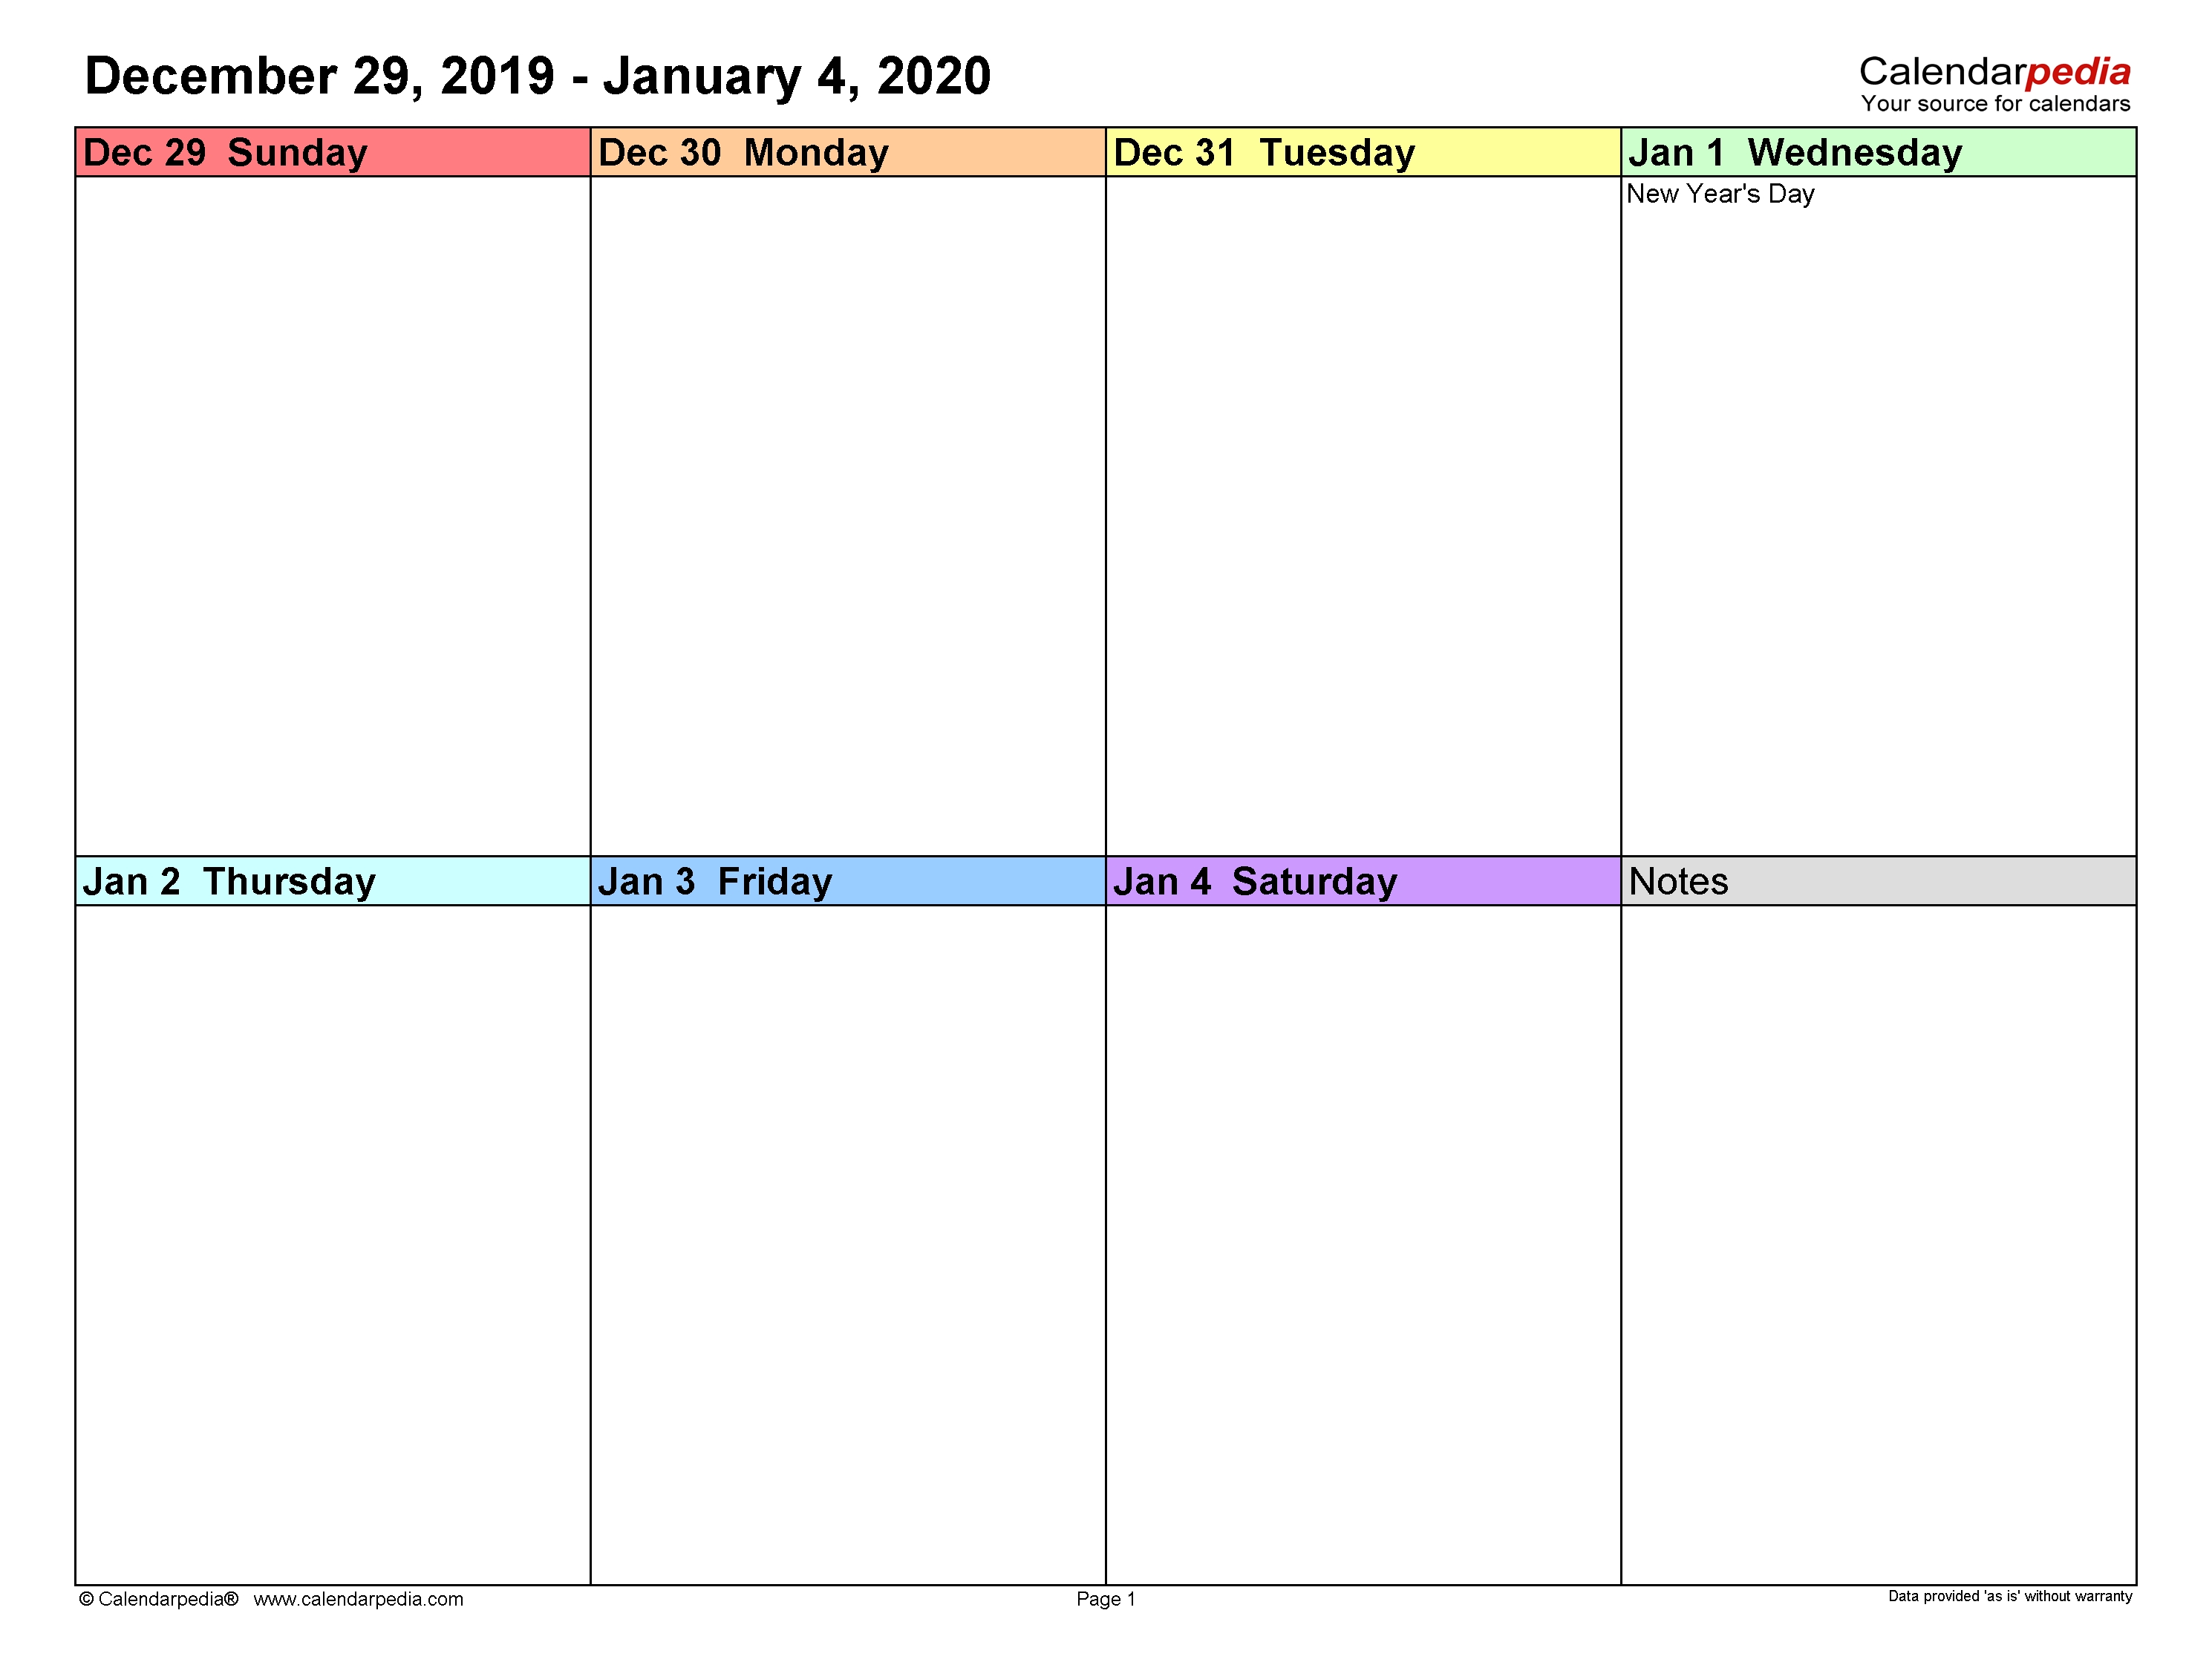 Weekly Calendars 2020 For Word - 12 Free Printable Templates Free 7 Day Calendar Printable Template